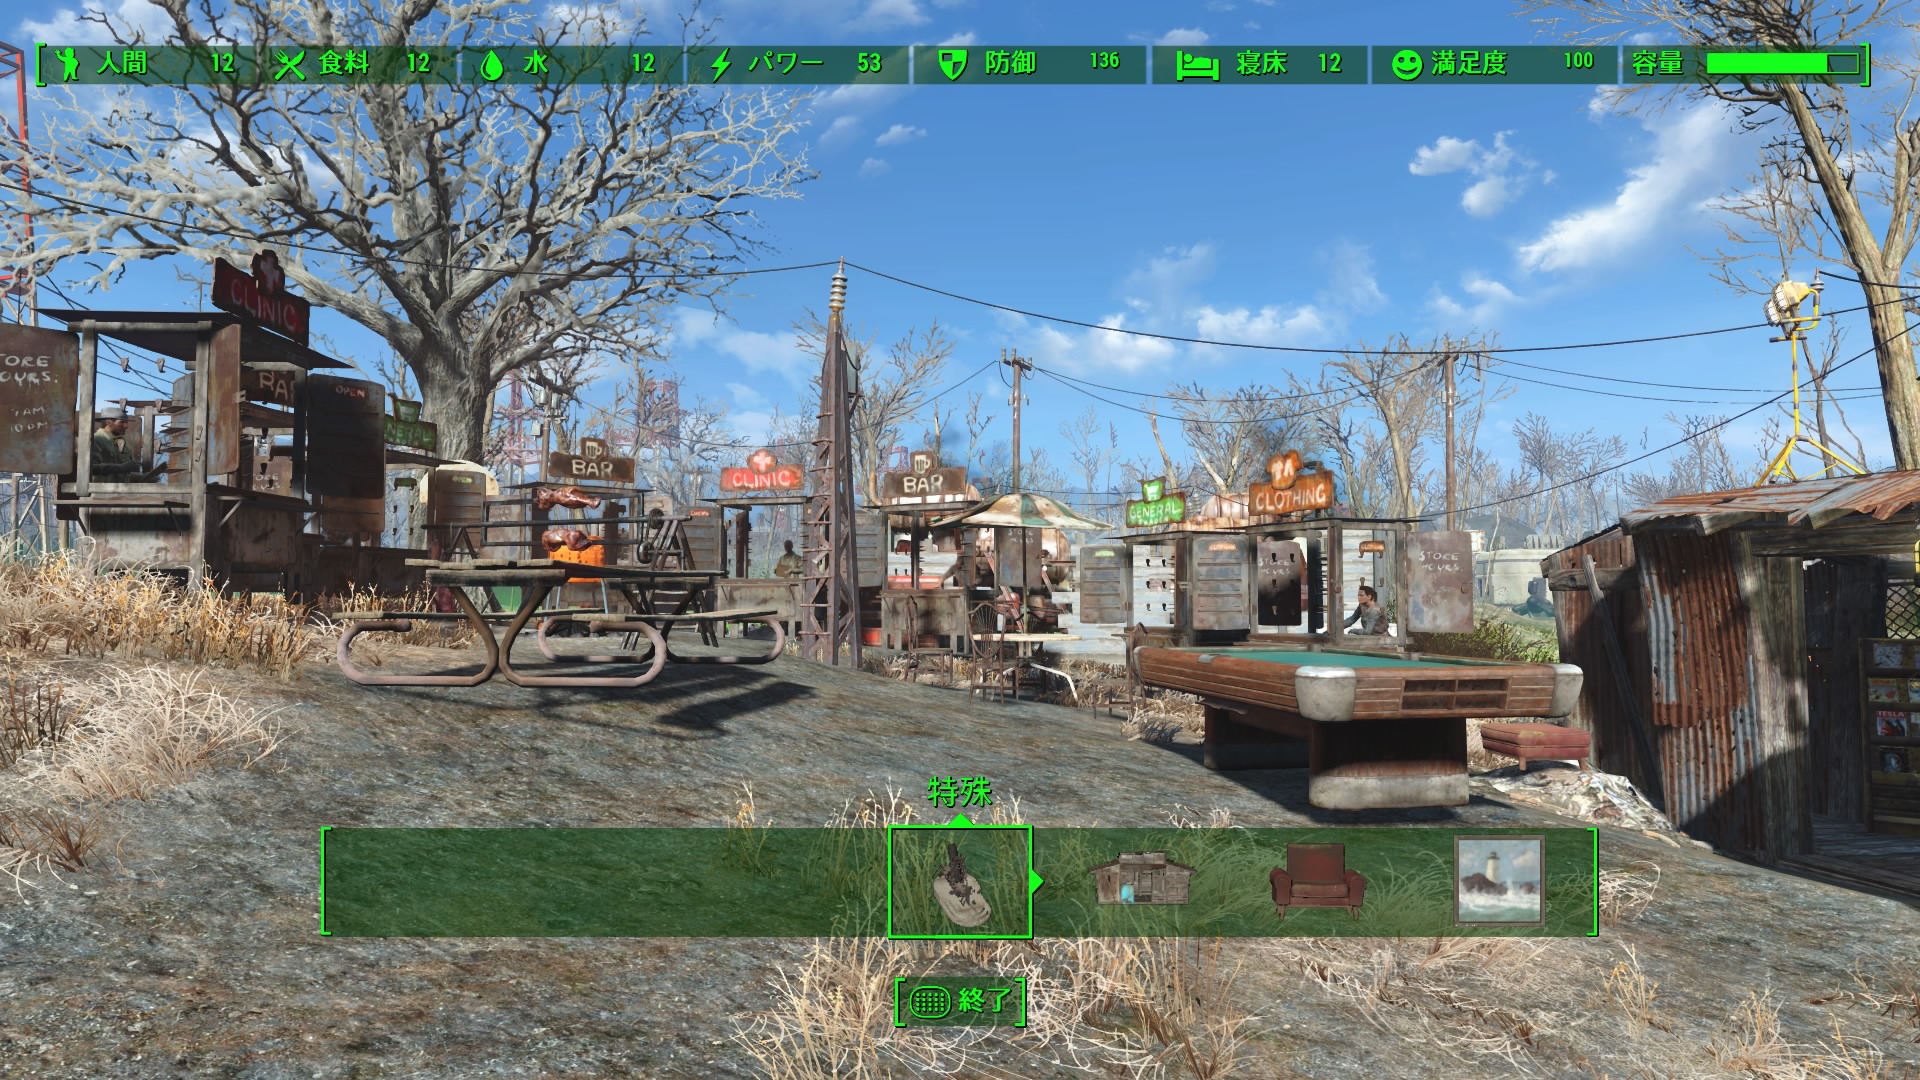 Fallout 4 容量ゲージが緑のままで満足度100に達する